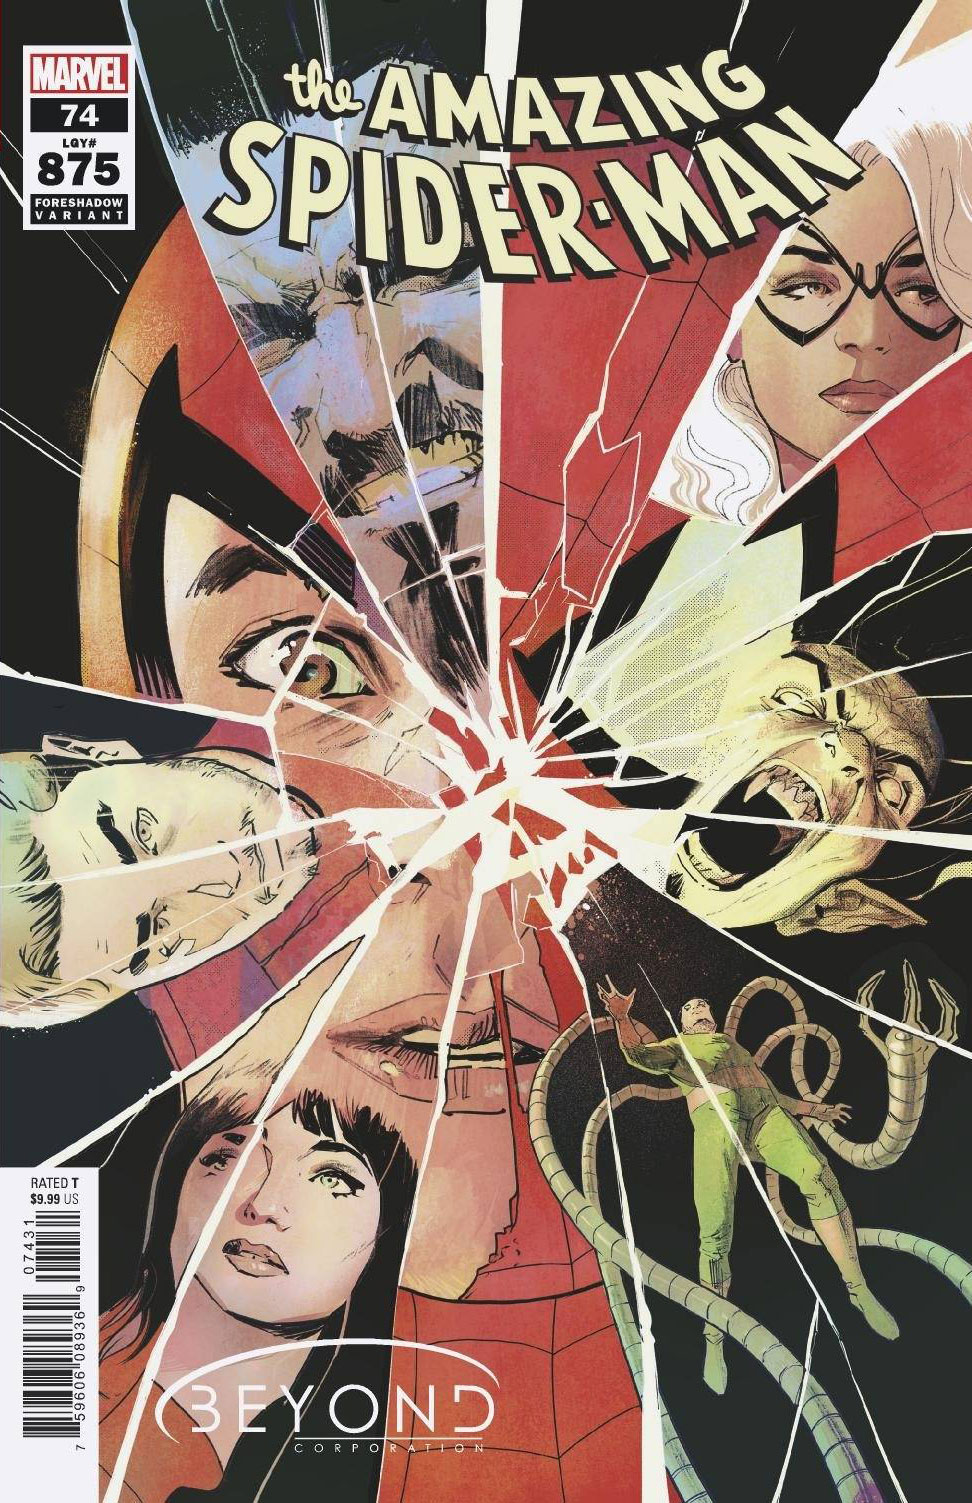 Amazing Spider-Man #74 Foreshadow Variant (2018)